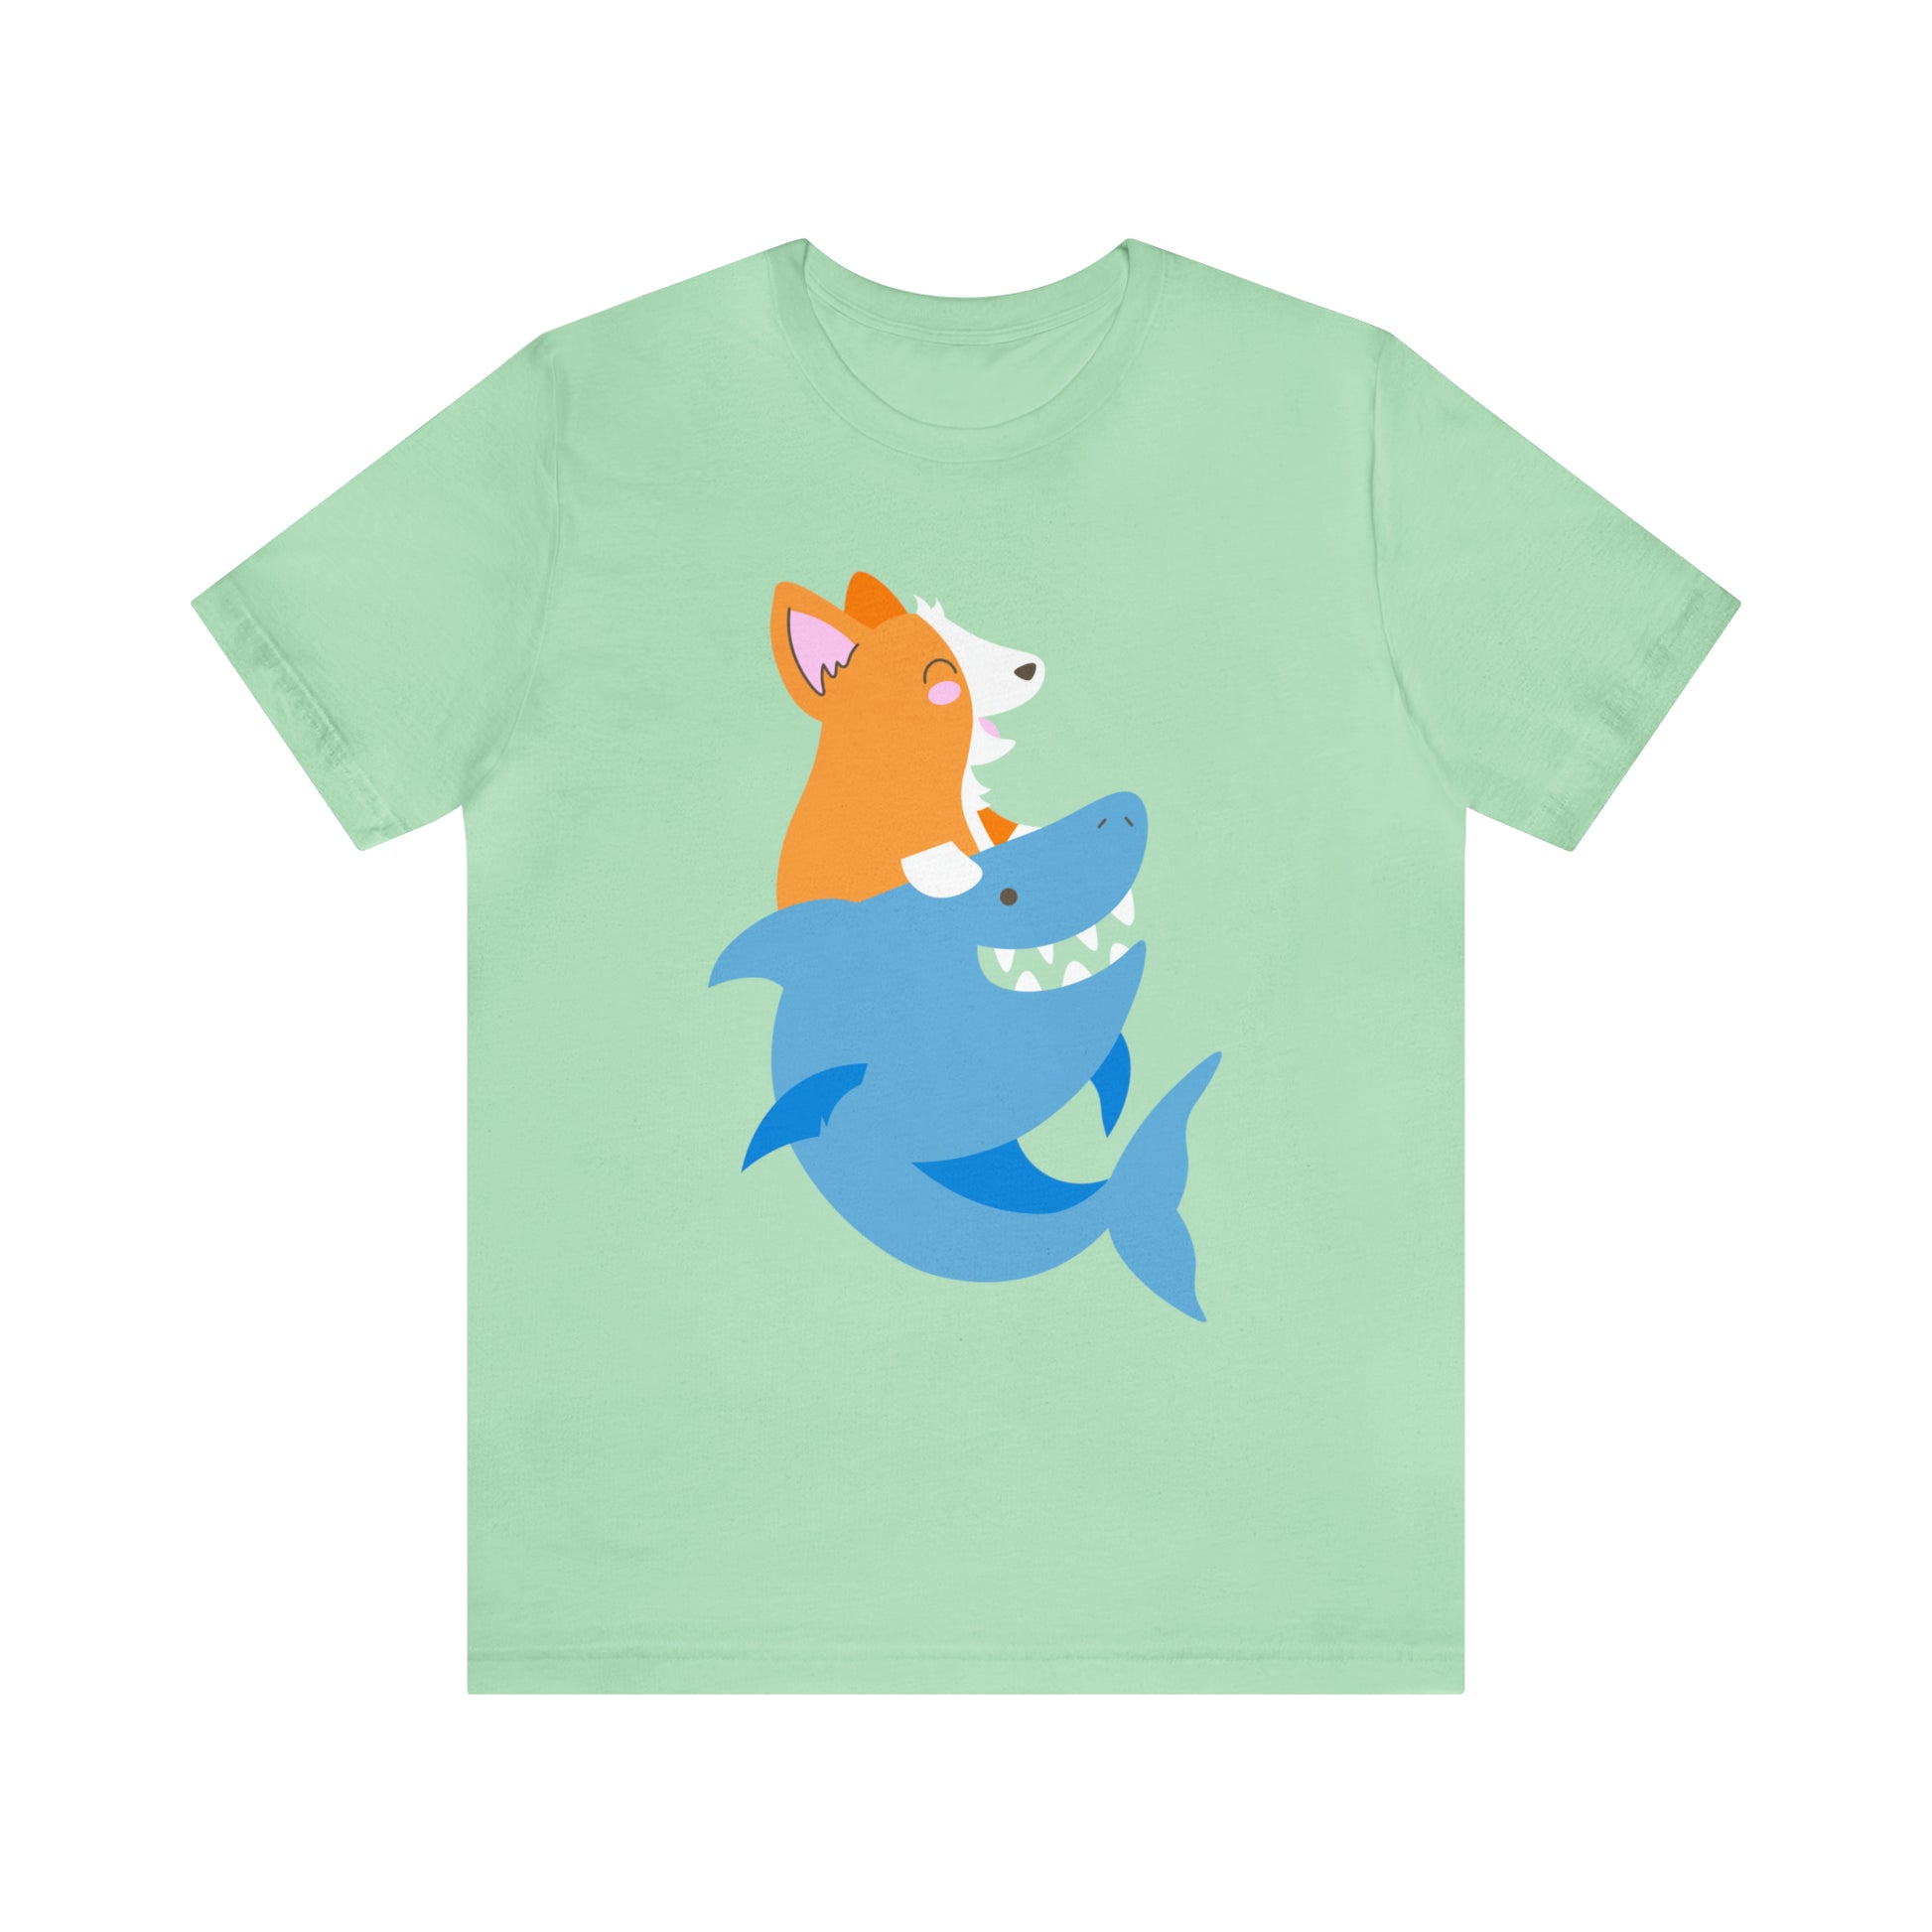 green mint corgi dog shark fish woman man t-shirt unisex short sleeve shirt